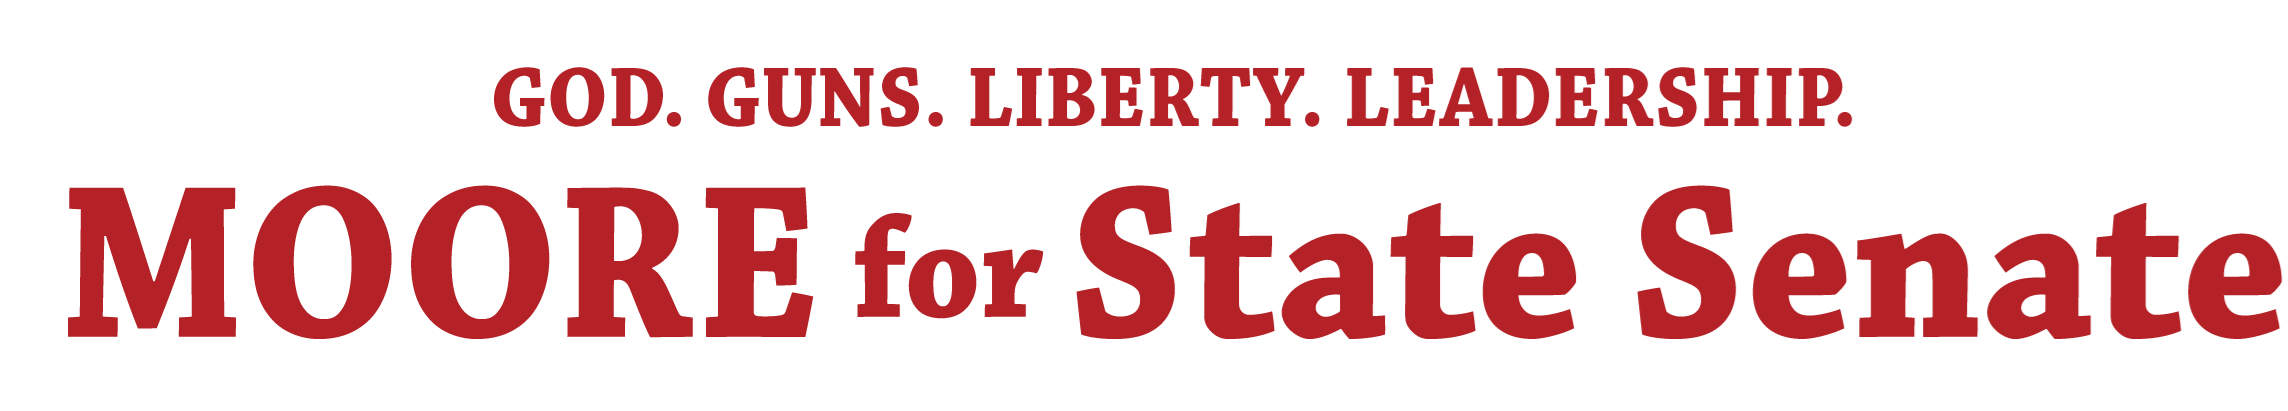 Colton Moore for State Senate - Moore Liberty. Moore Leadership